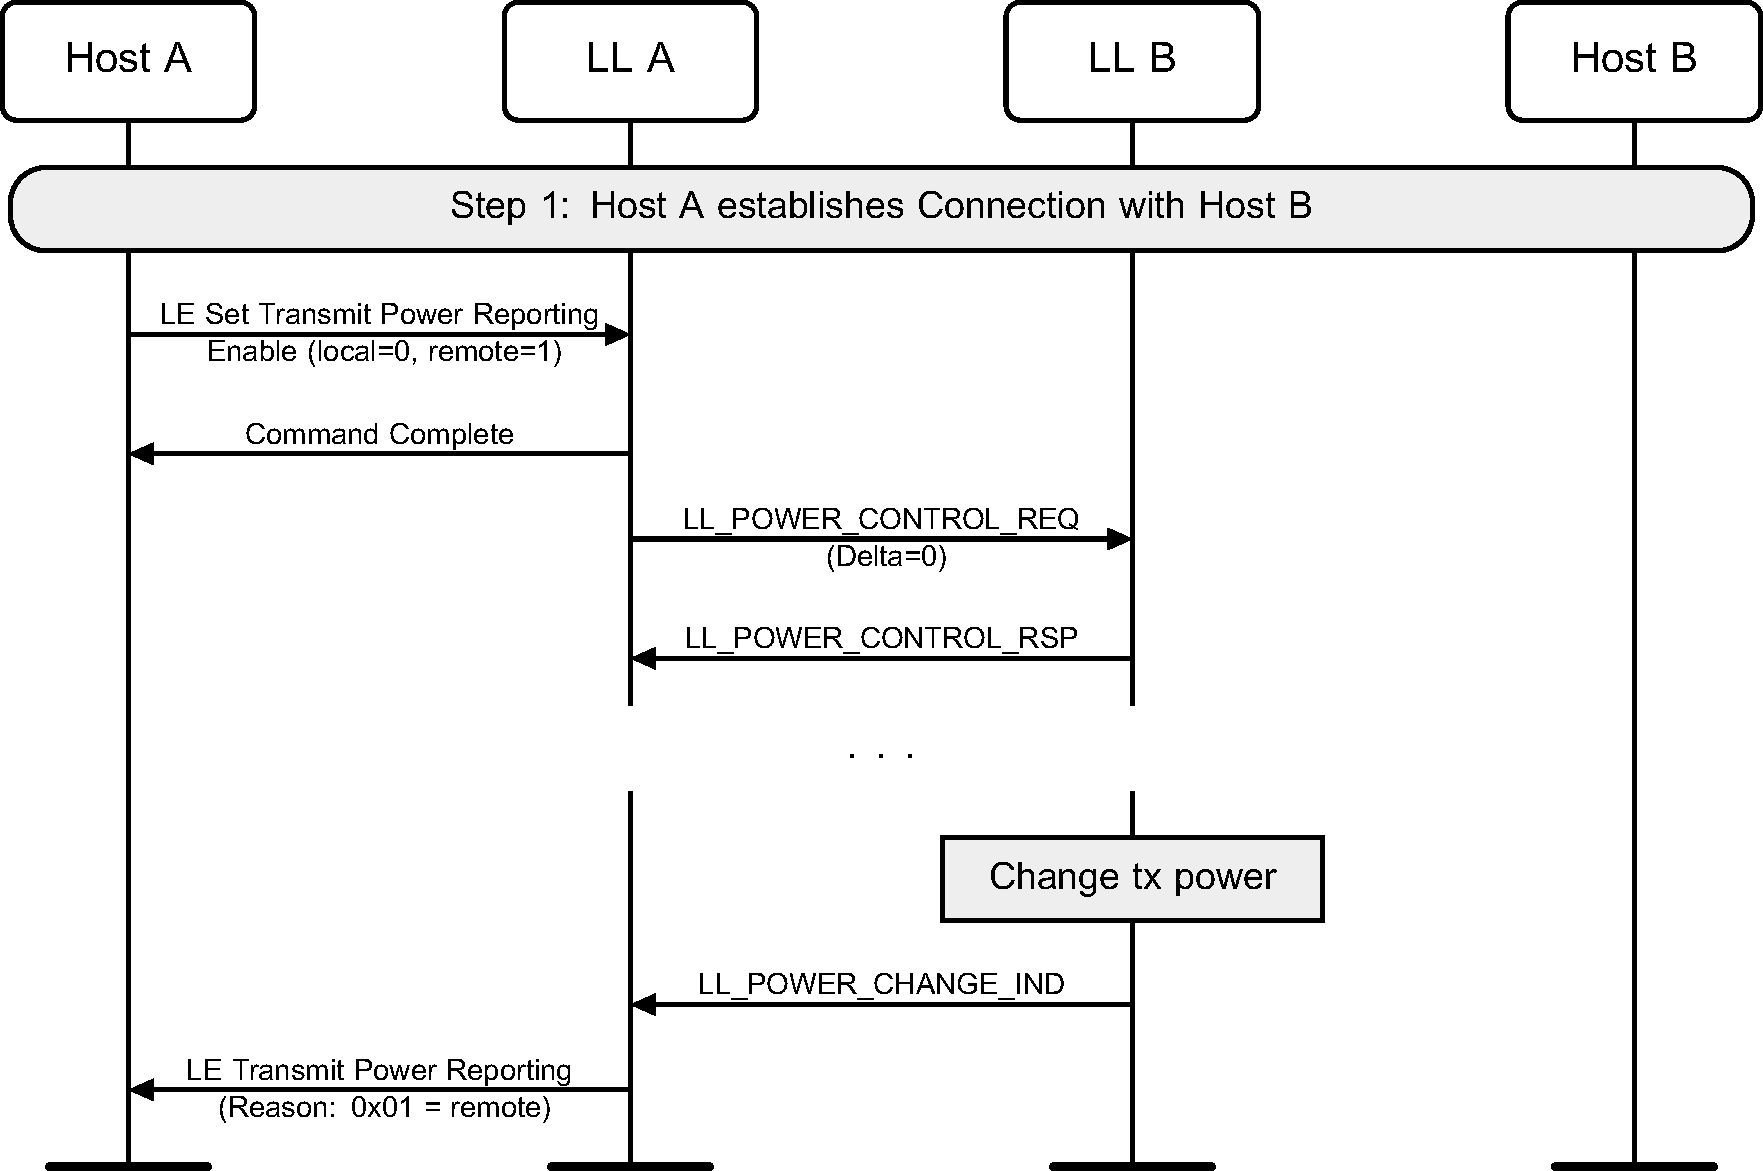 LL Power Change Indication procedure when device adjusts TX power autonomously